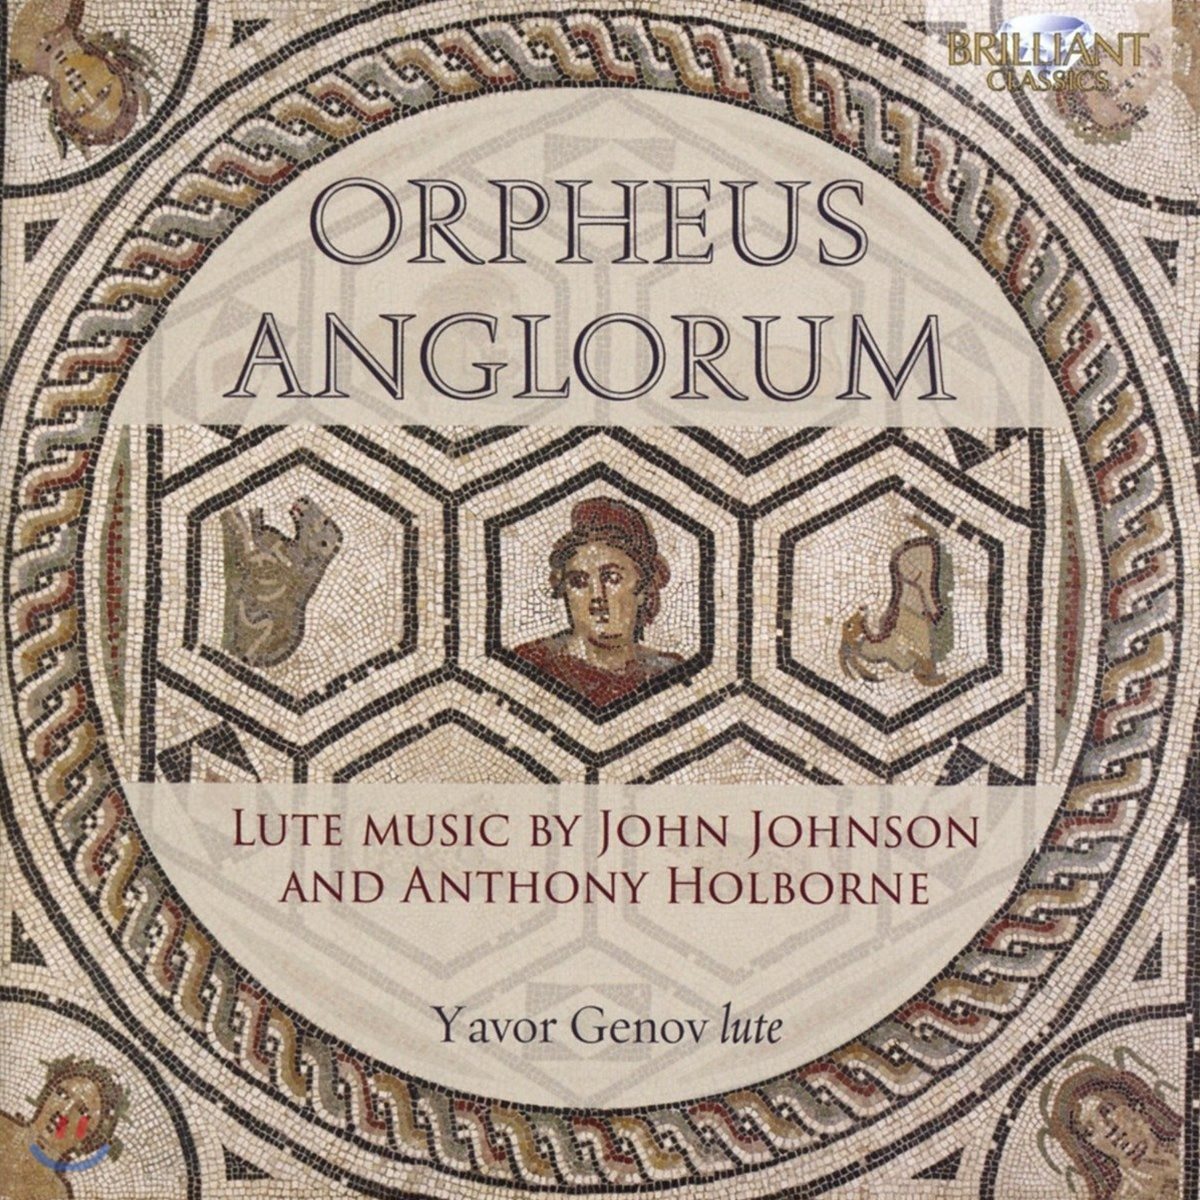 Yavor Genov 오르페우스 앤글로럼 - 존 존슨과 안토니 홀번의 류트 음악 (Orpheus Anglorum)